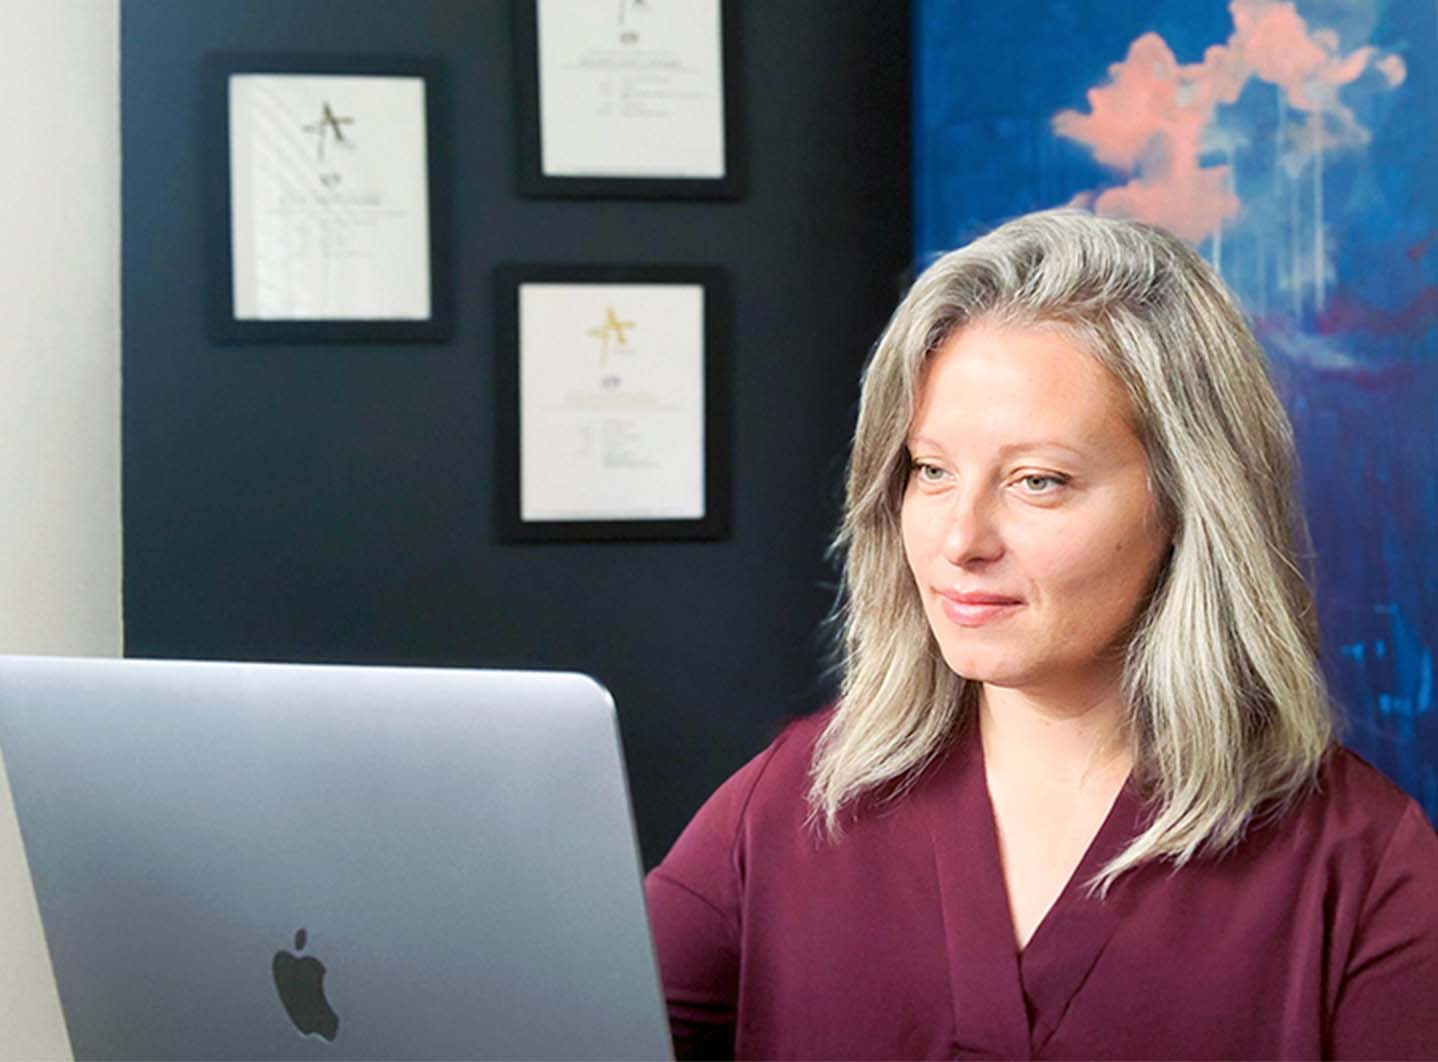 A designer using her desktop computer